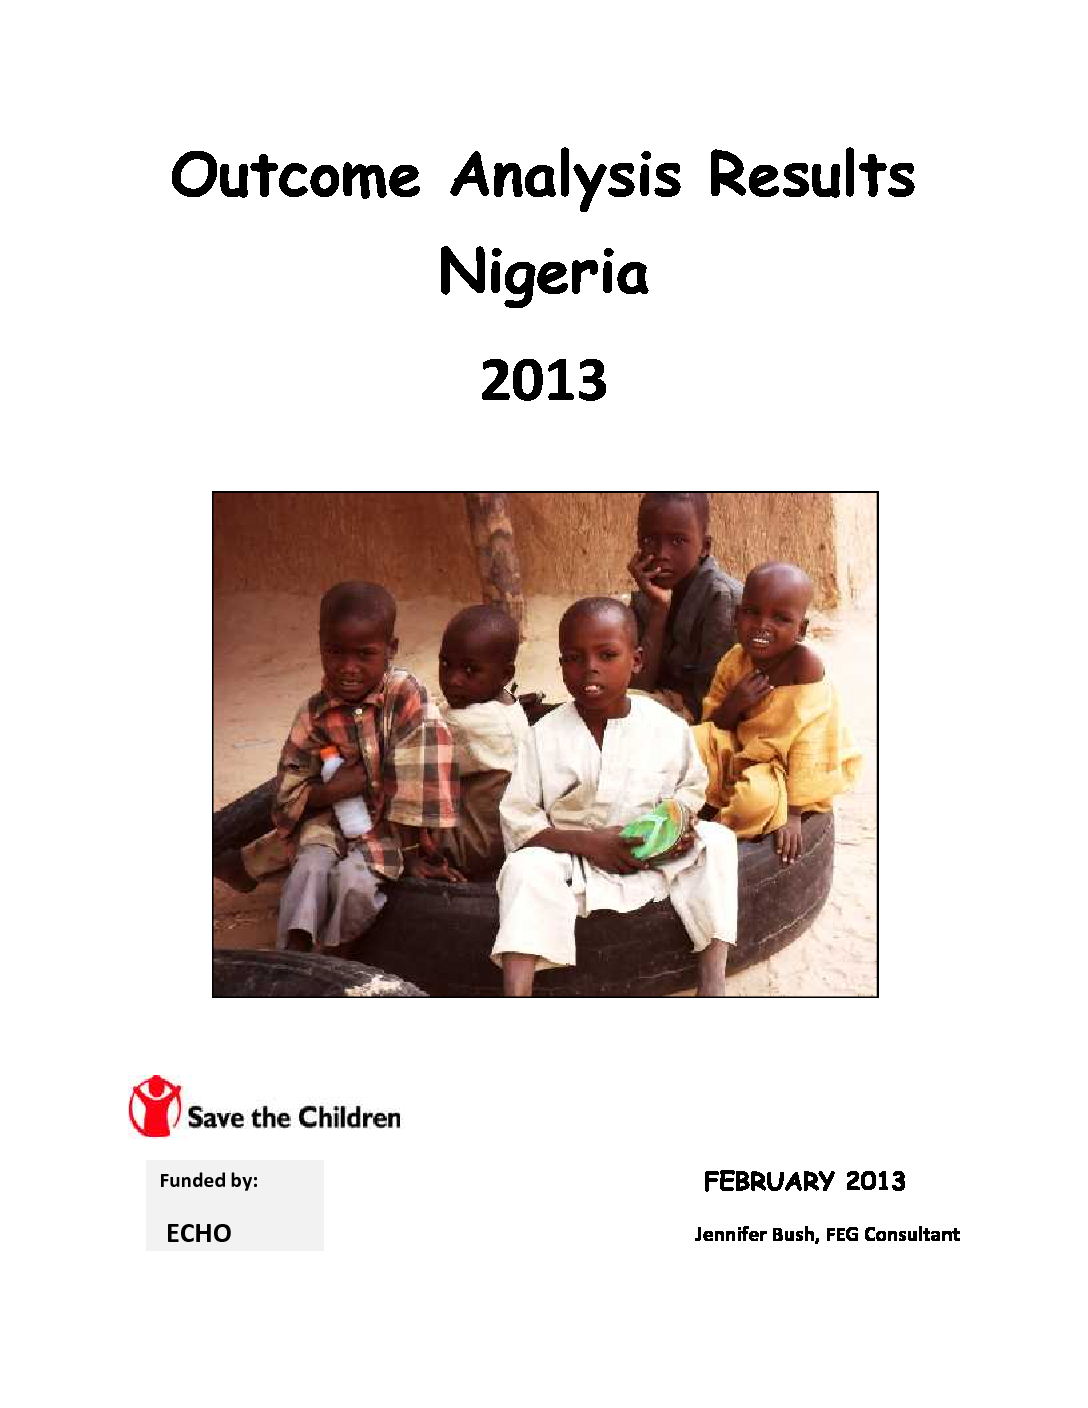 Outcome Analysis Report - Nigeria - February 2013